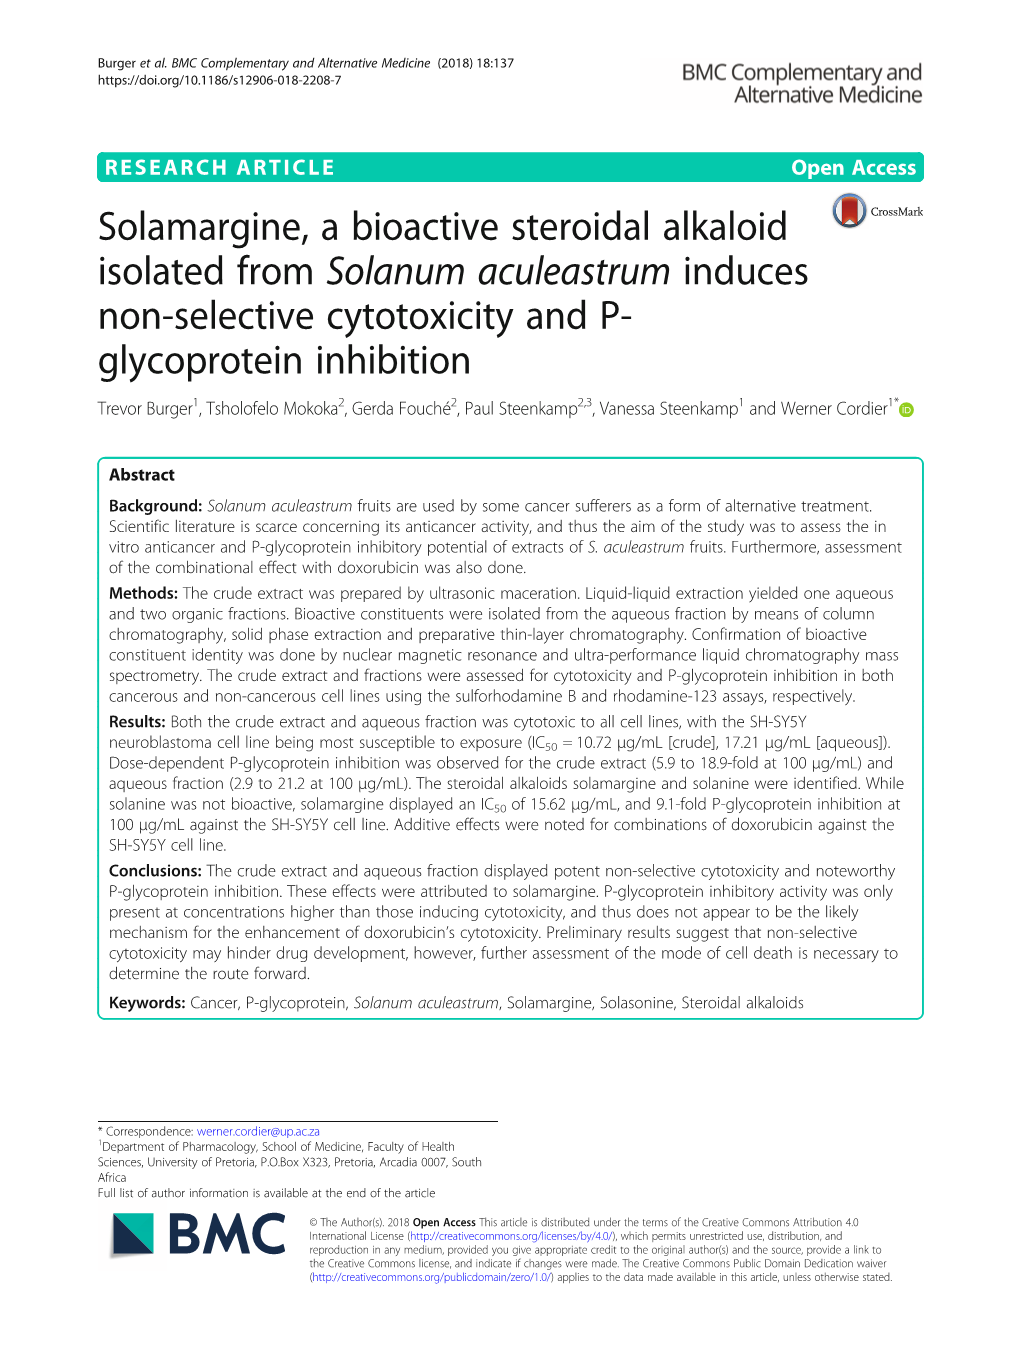 Solamargine, a Bioactive Steroidal Alkaloid Isolated from Solanum